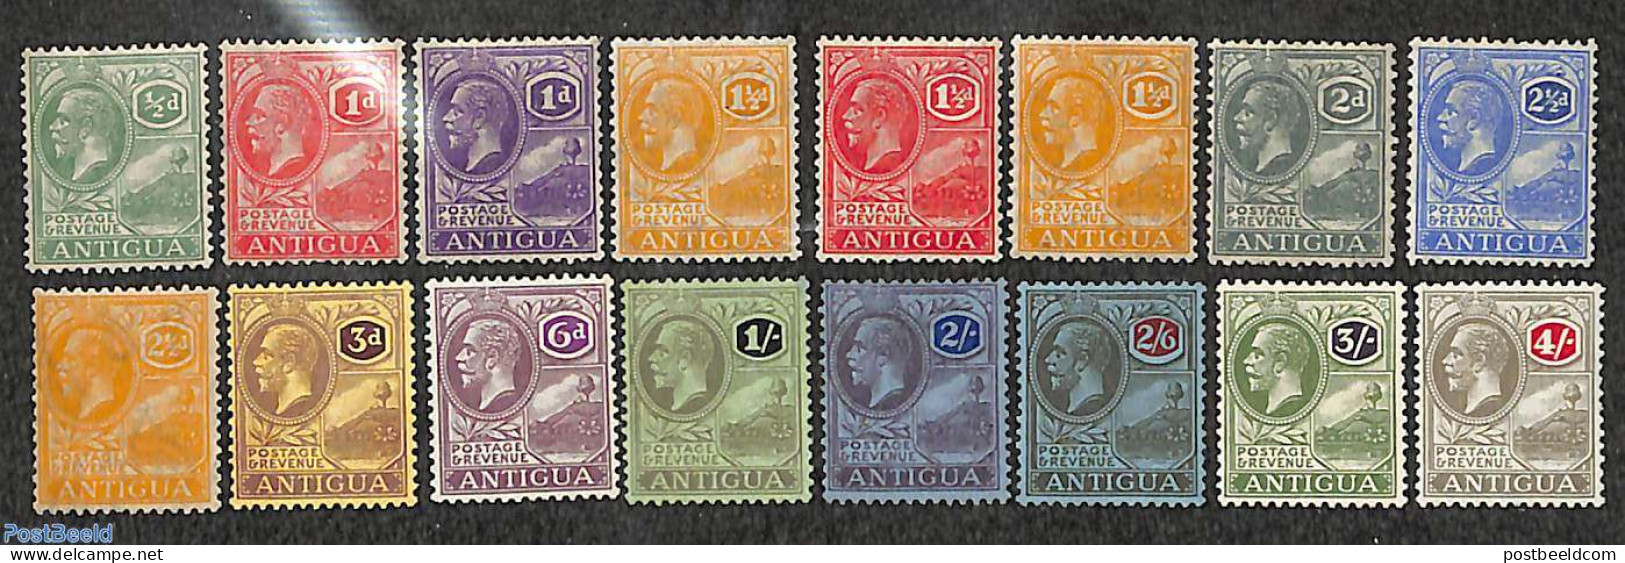 Antigua & Barbuda 1921 Definitives 16v, Unused (hinged) - Antigua Y Barbuda (1981-...)